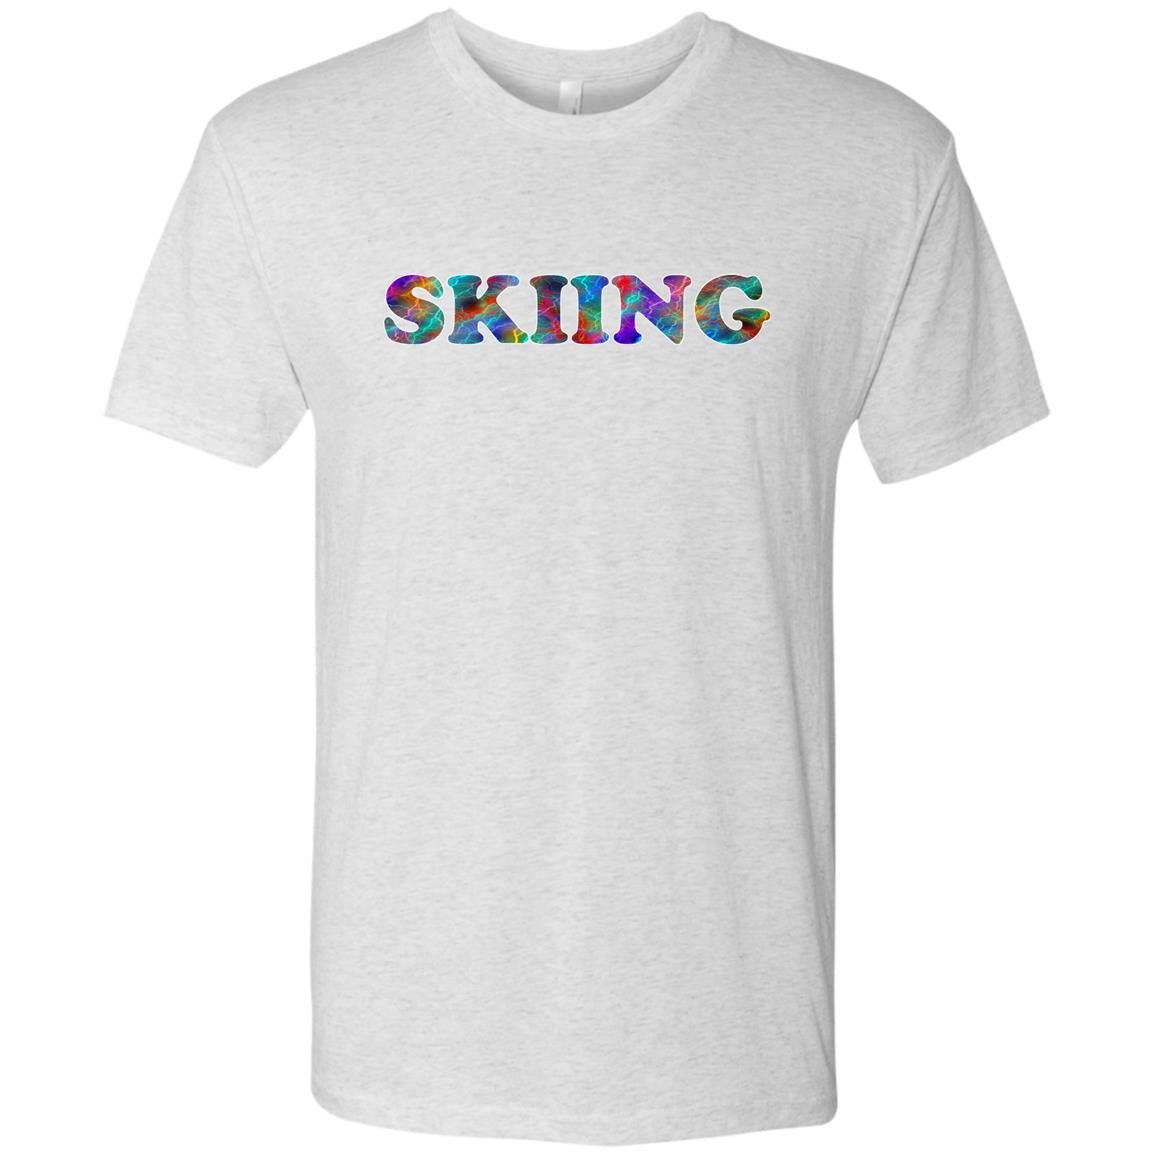 Skiing Sport T-Shirt